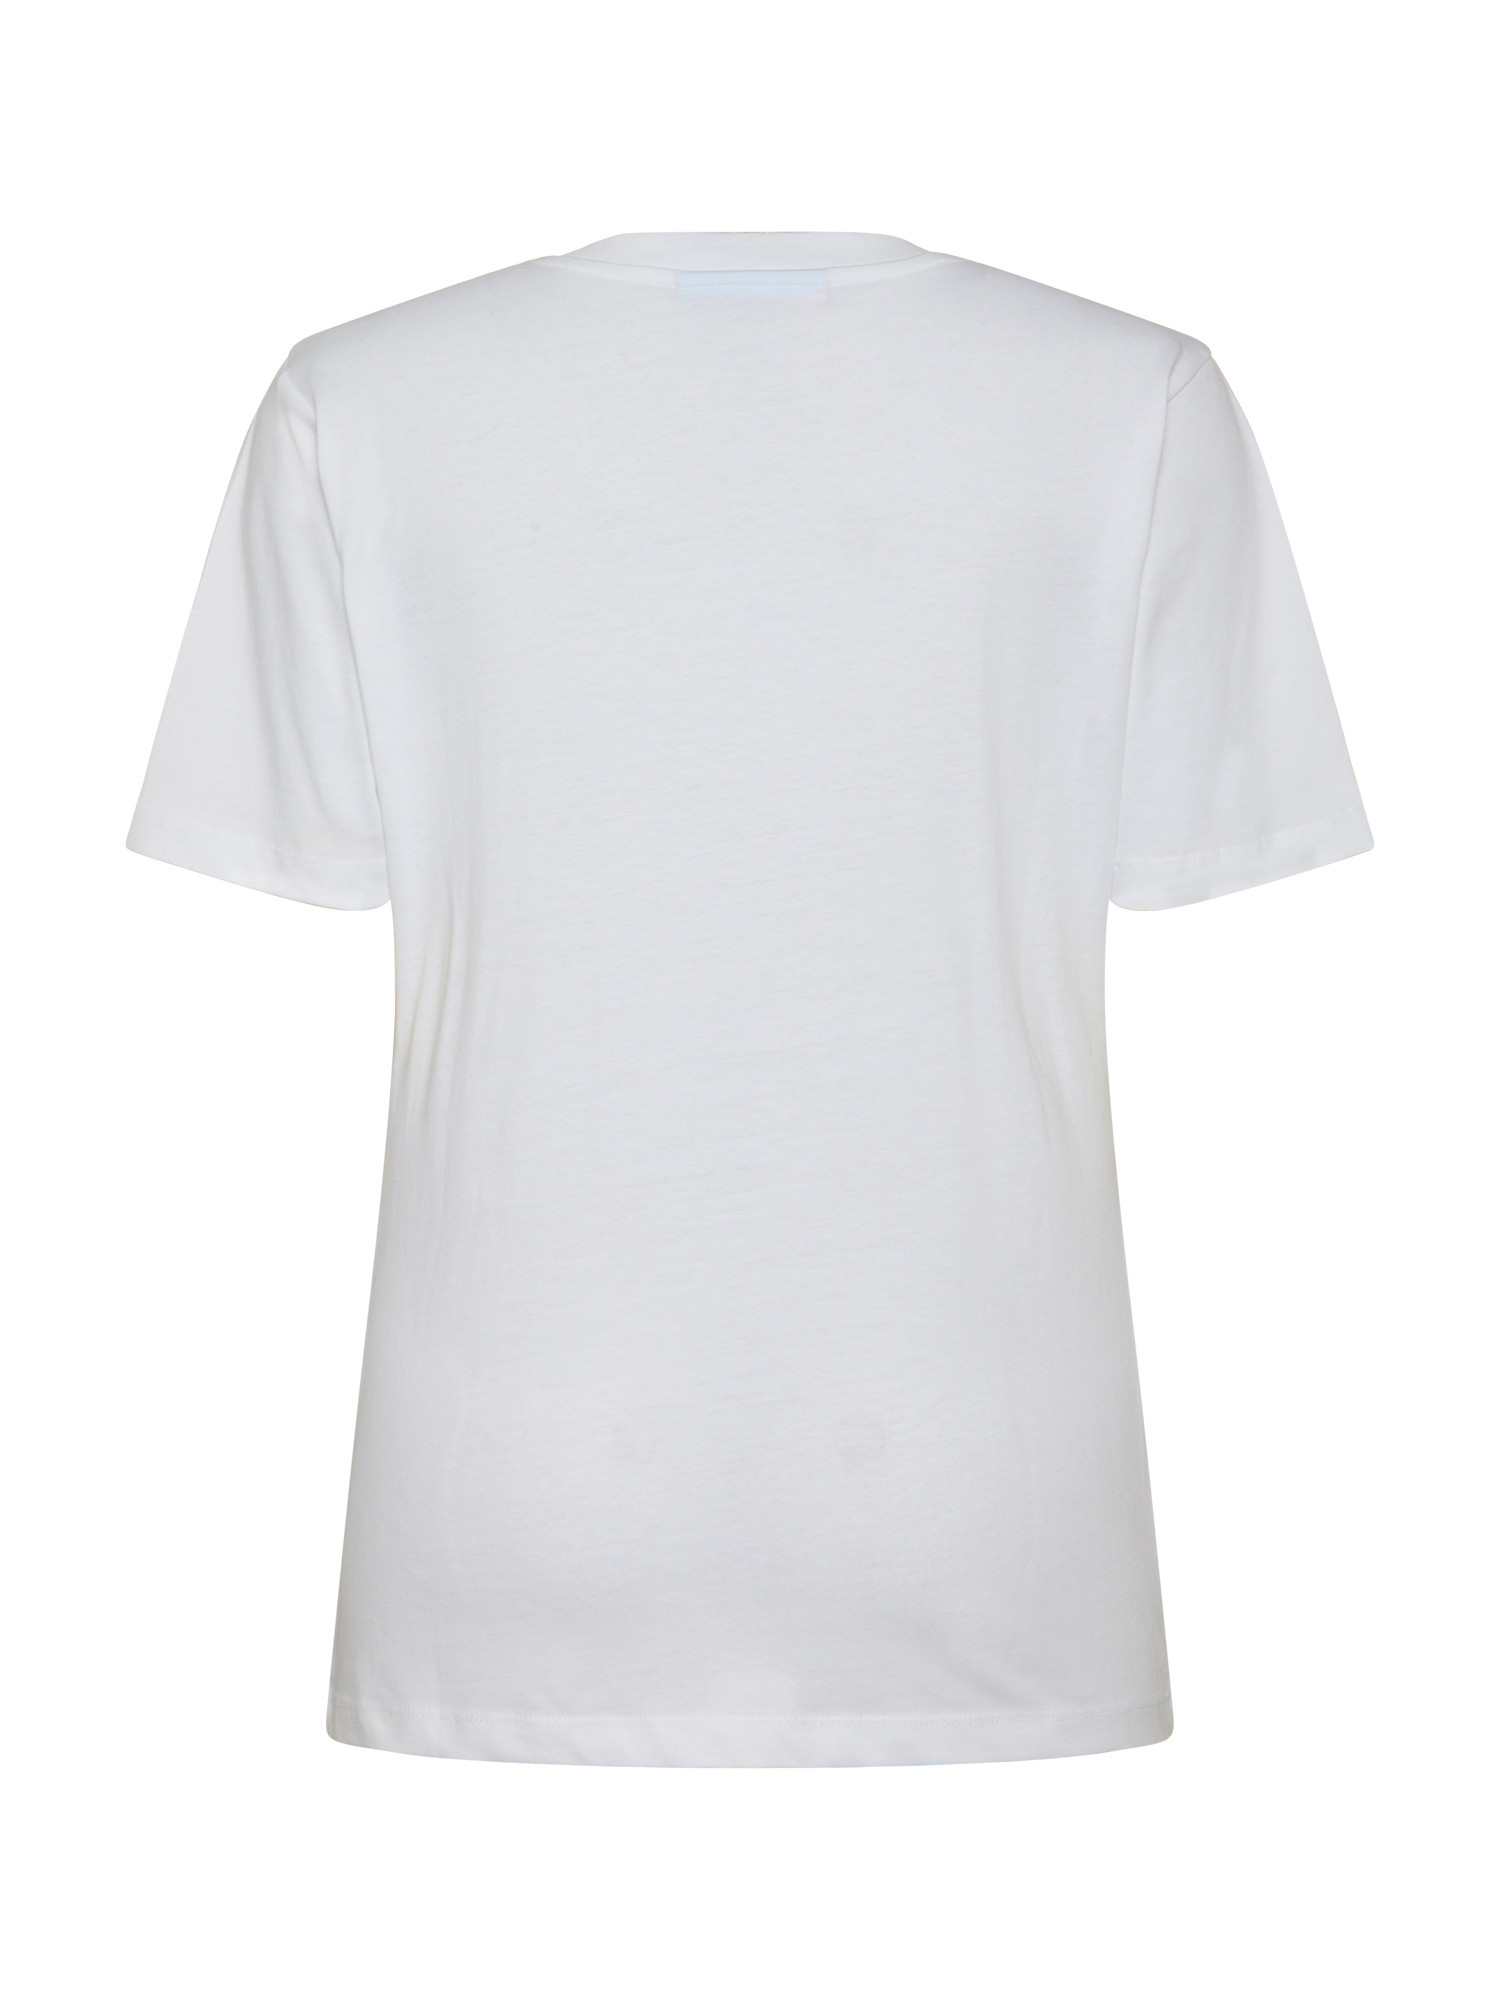 Chiara Ferragni - Embroidered logo T-shirt, White, large image number 1